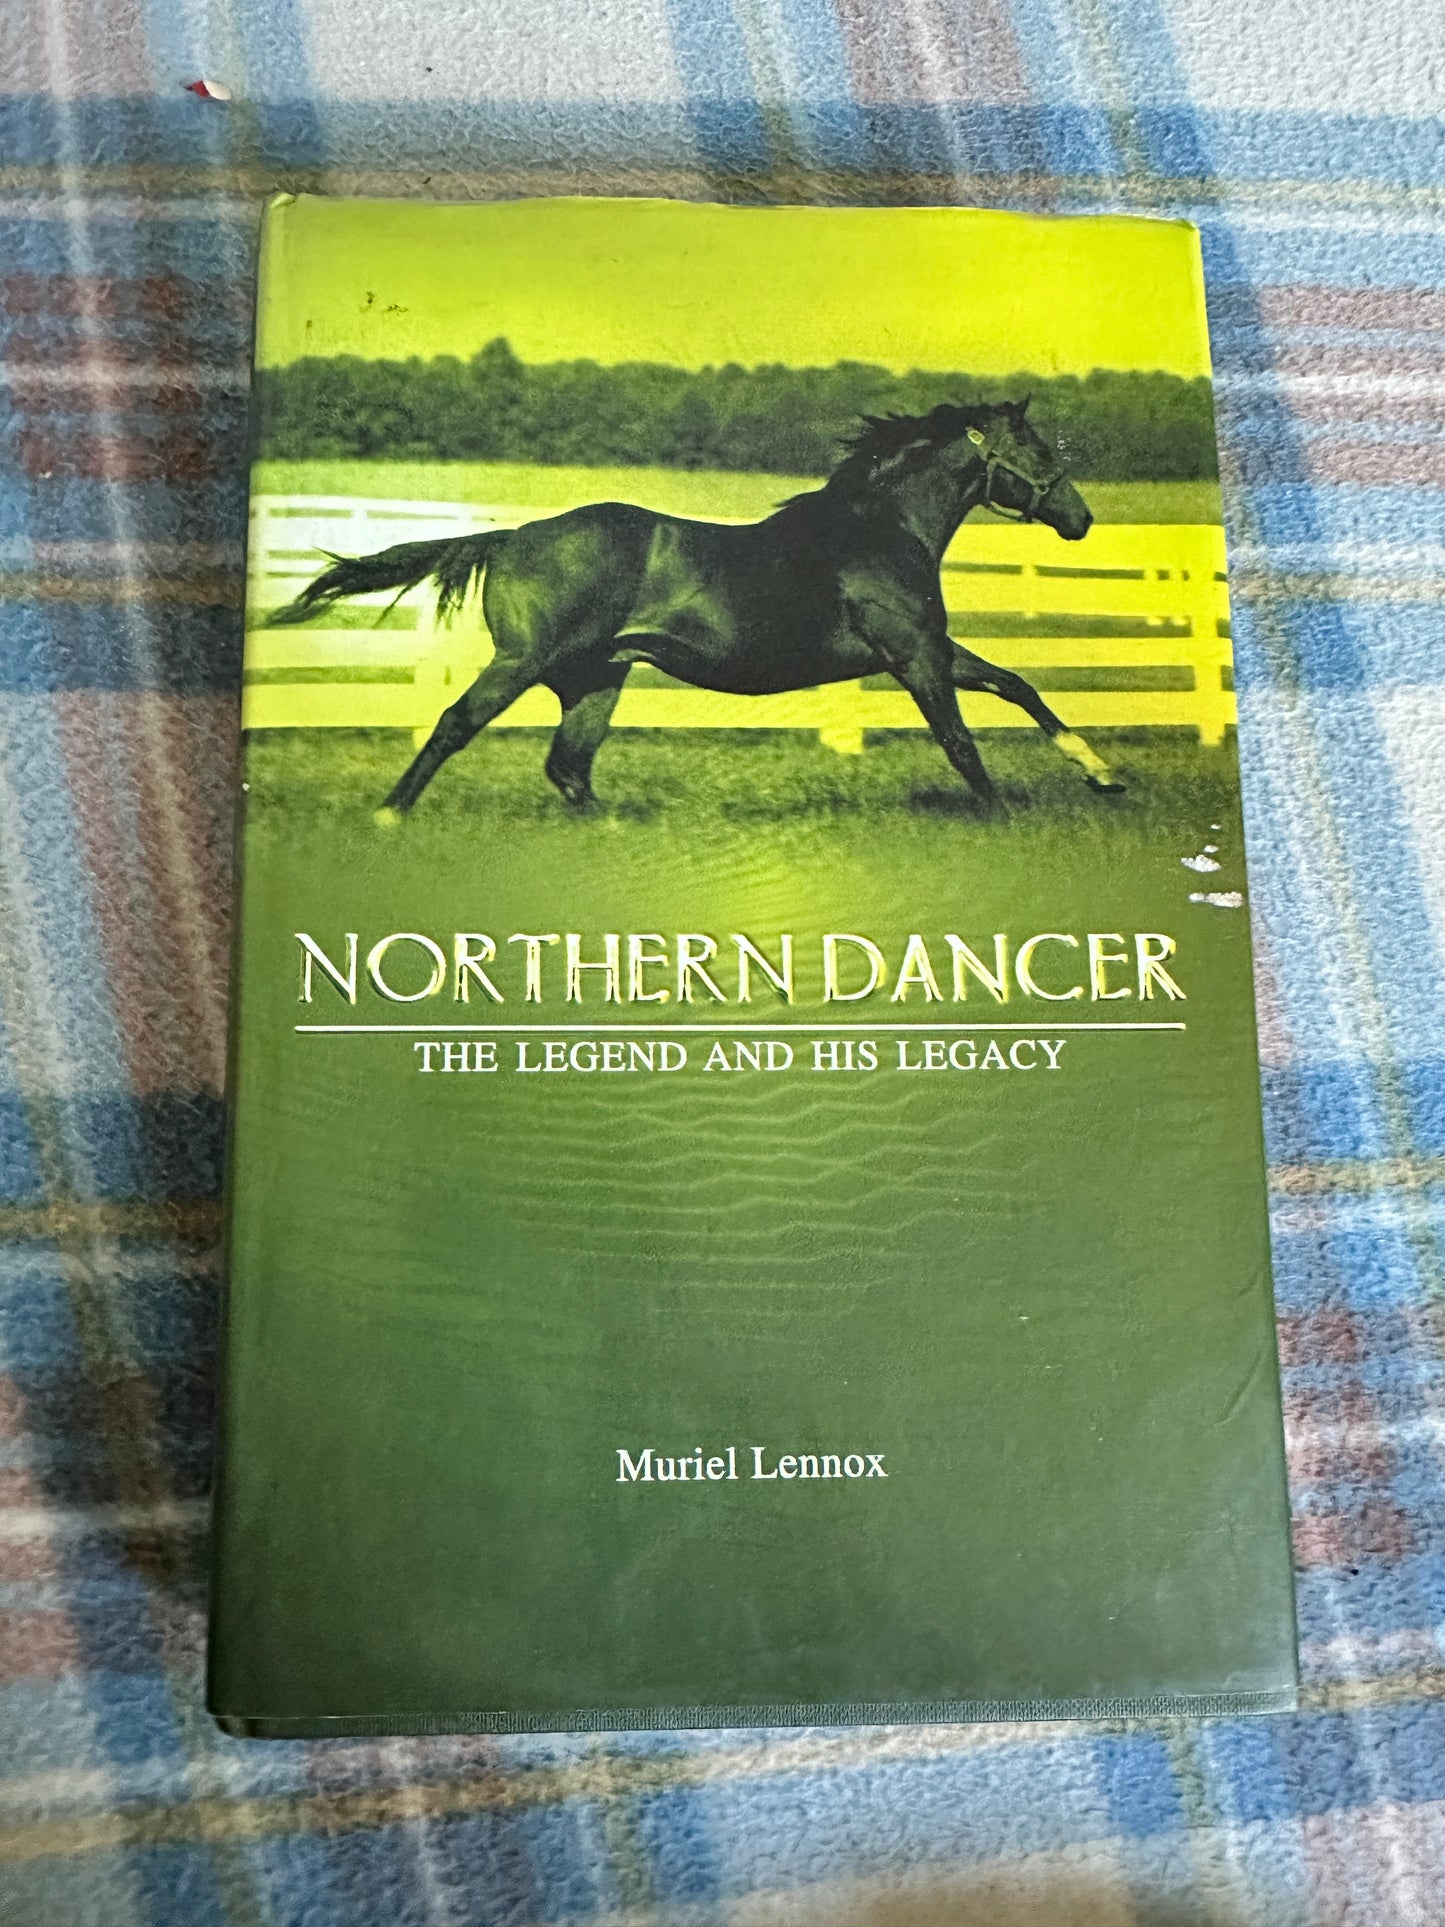 1999*1st* Northern Dancer - Muriel Lennox(Mainstream Publishing)